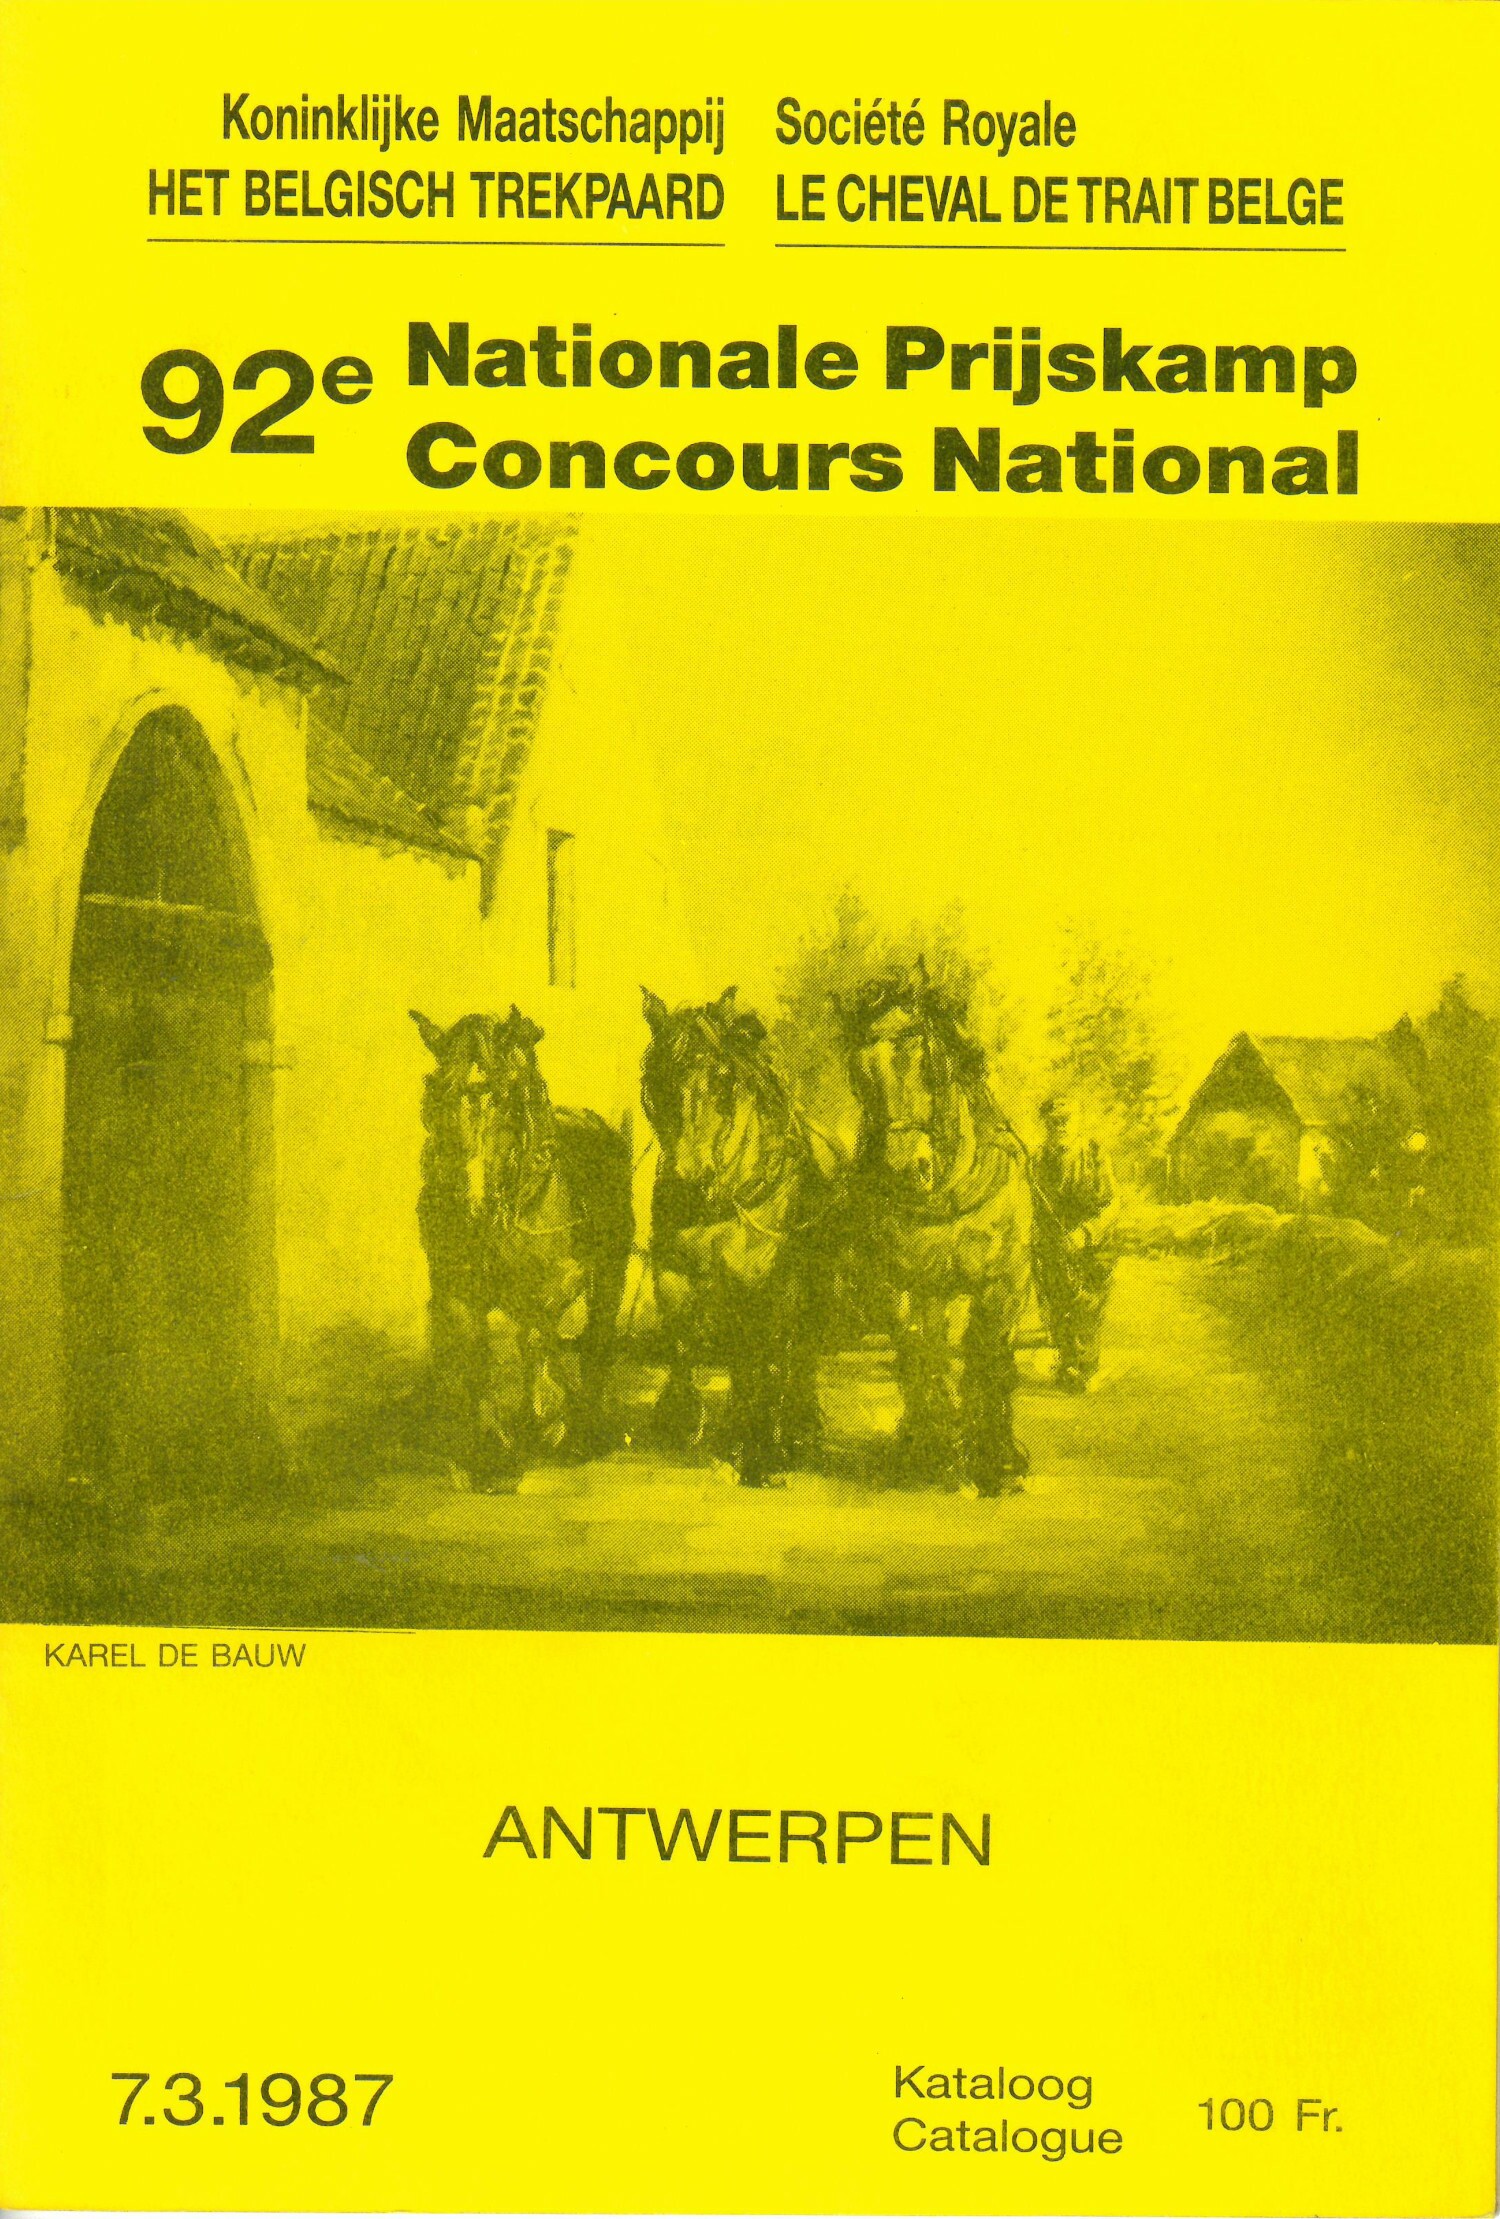 Les Cheval de trait belge et adennes 1987 (Herausgeber RR-R)